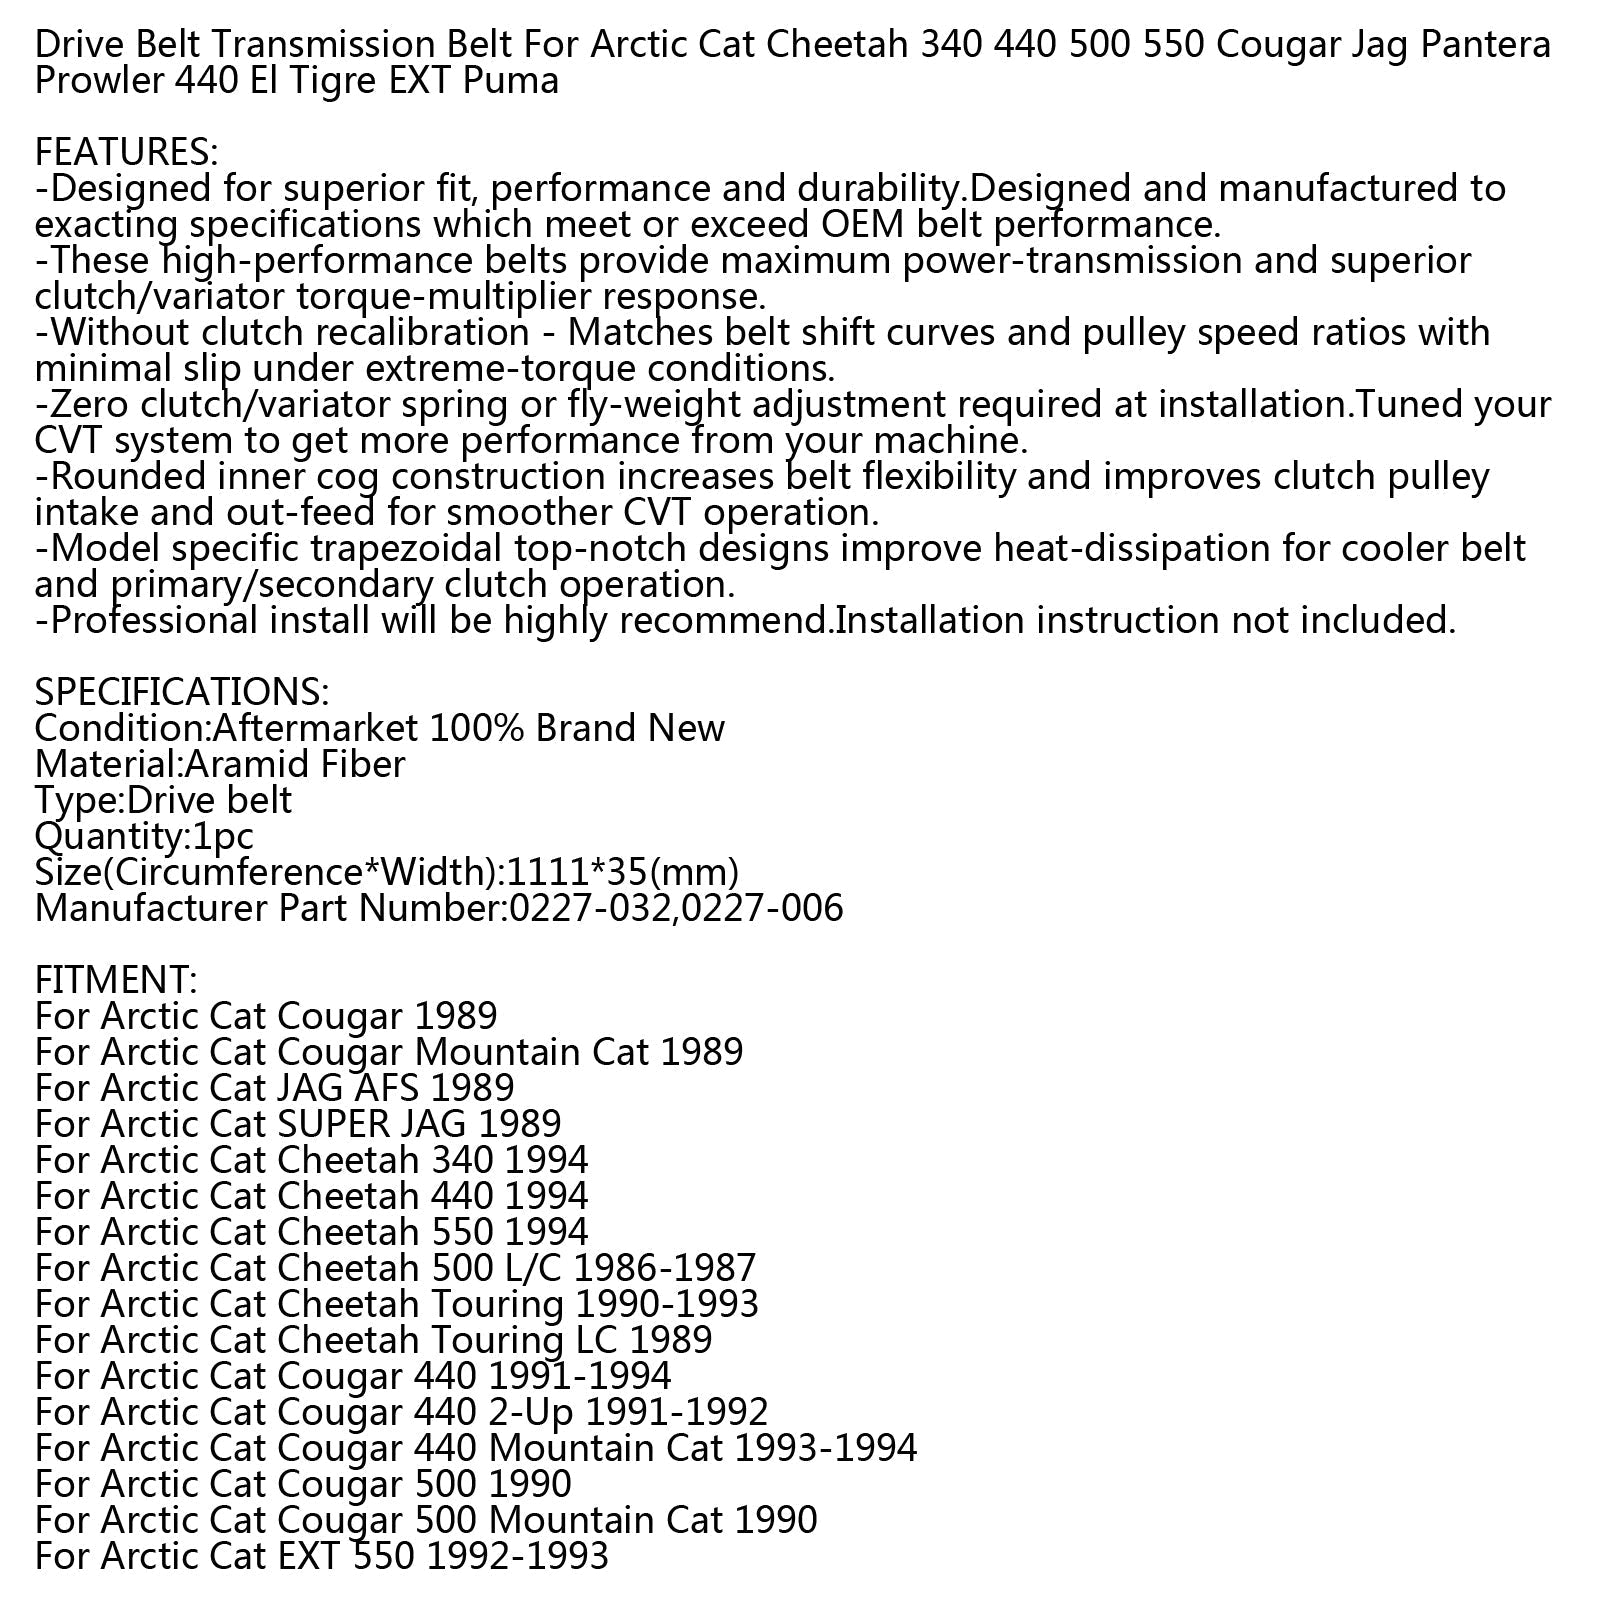 Cinghia di trasmissione per Arctic Cat 0227-032 0227-006 Cougar Cheetah JAG EXT Prowler Puma Generico